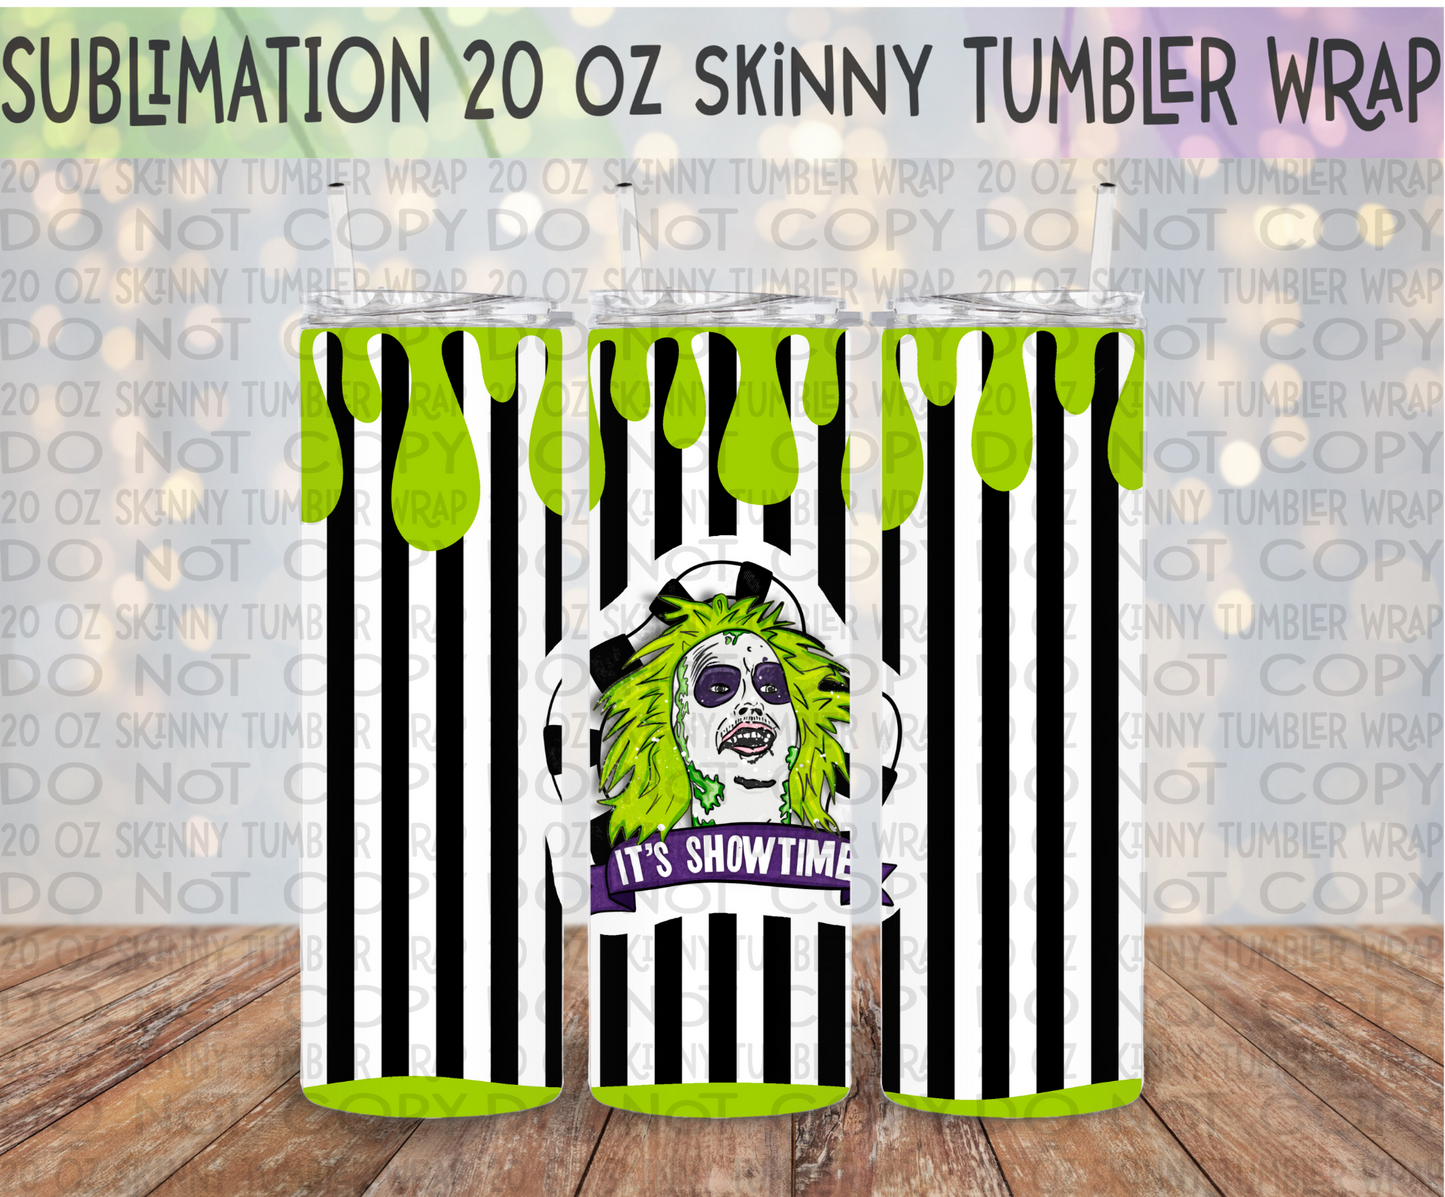 It's Showtime 20 Oz Skinny Tumbler Wrap - Sublimation Transfer - RTS